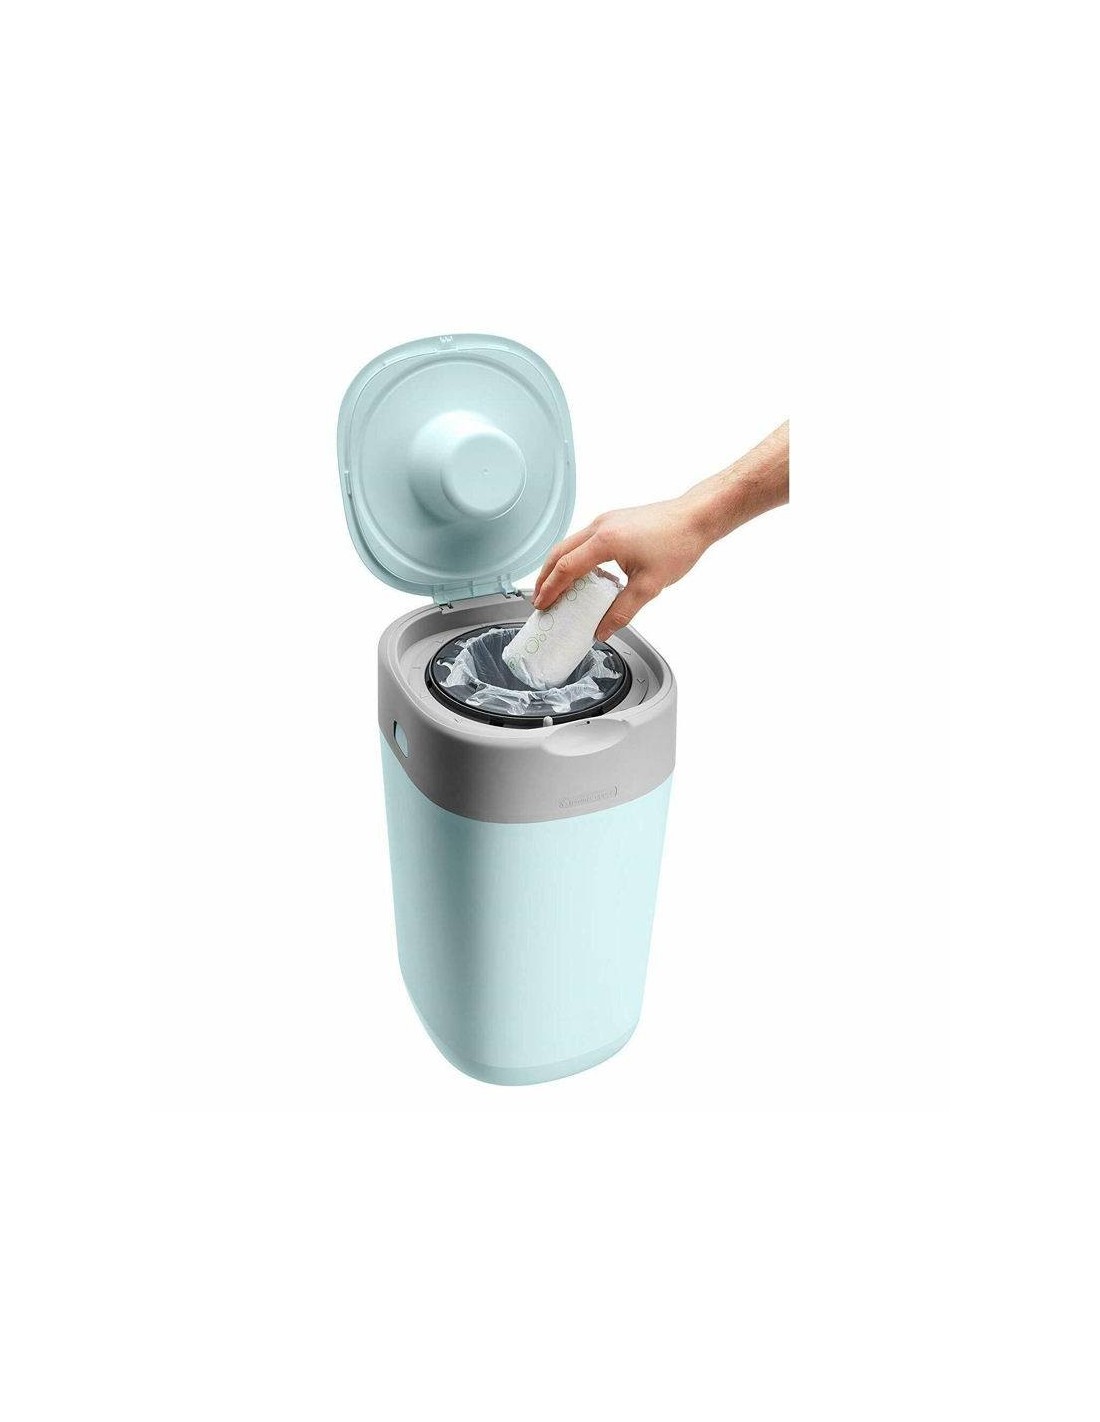 Cubo de basura para pañales Twist & click Tommee Tippee SANGENIC - azul